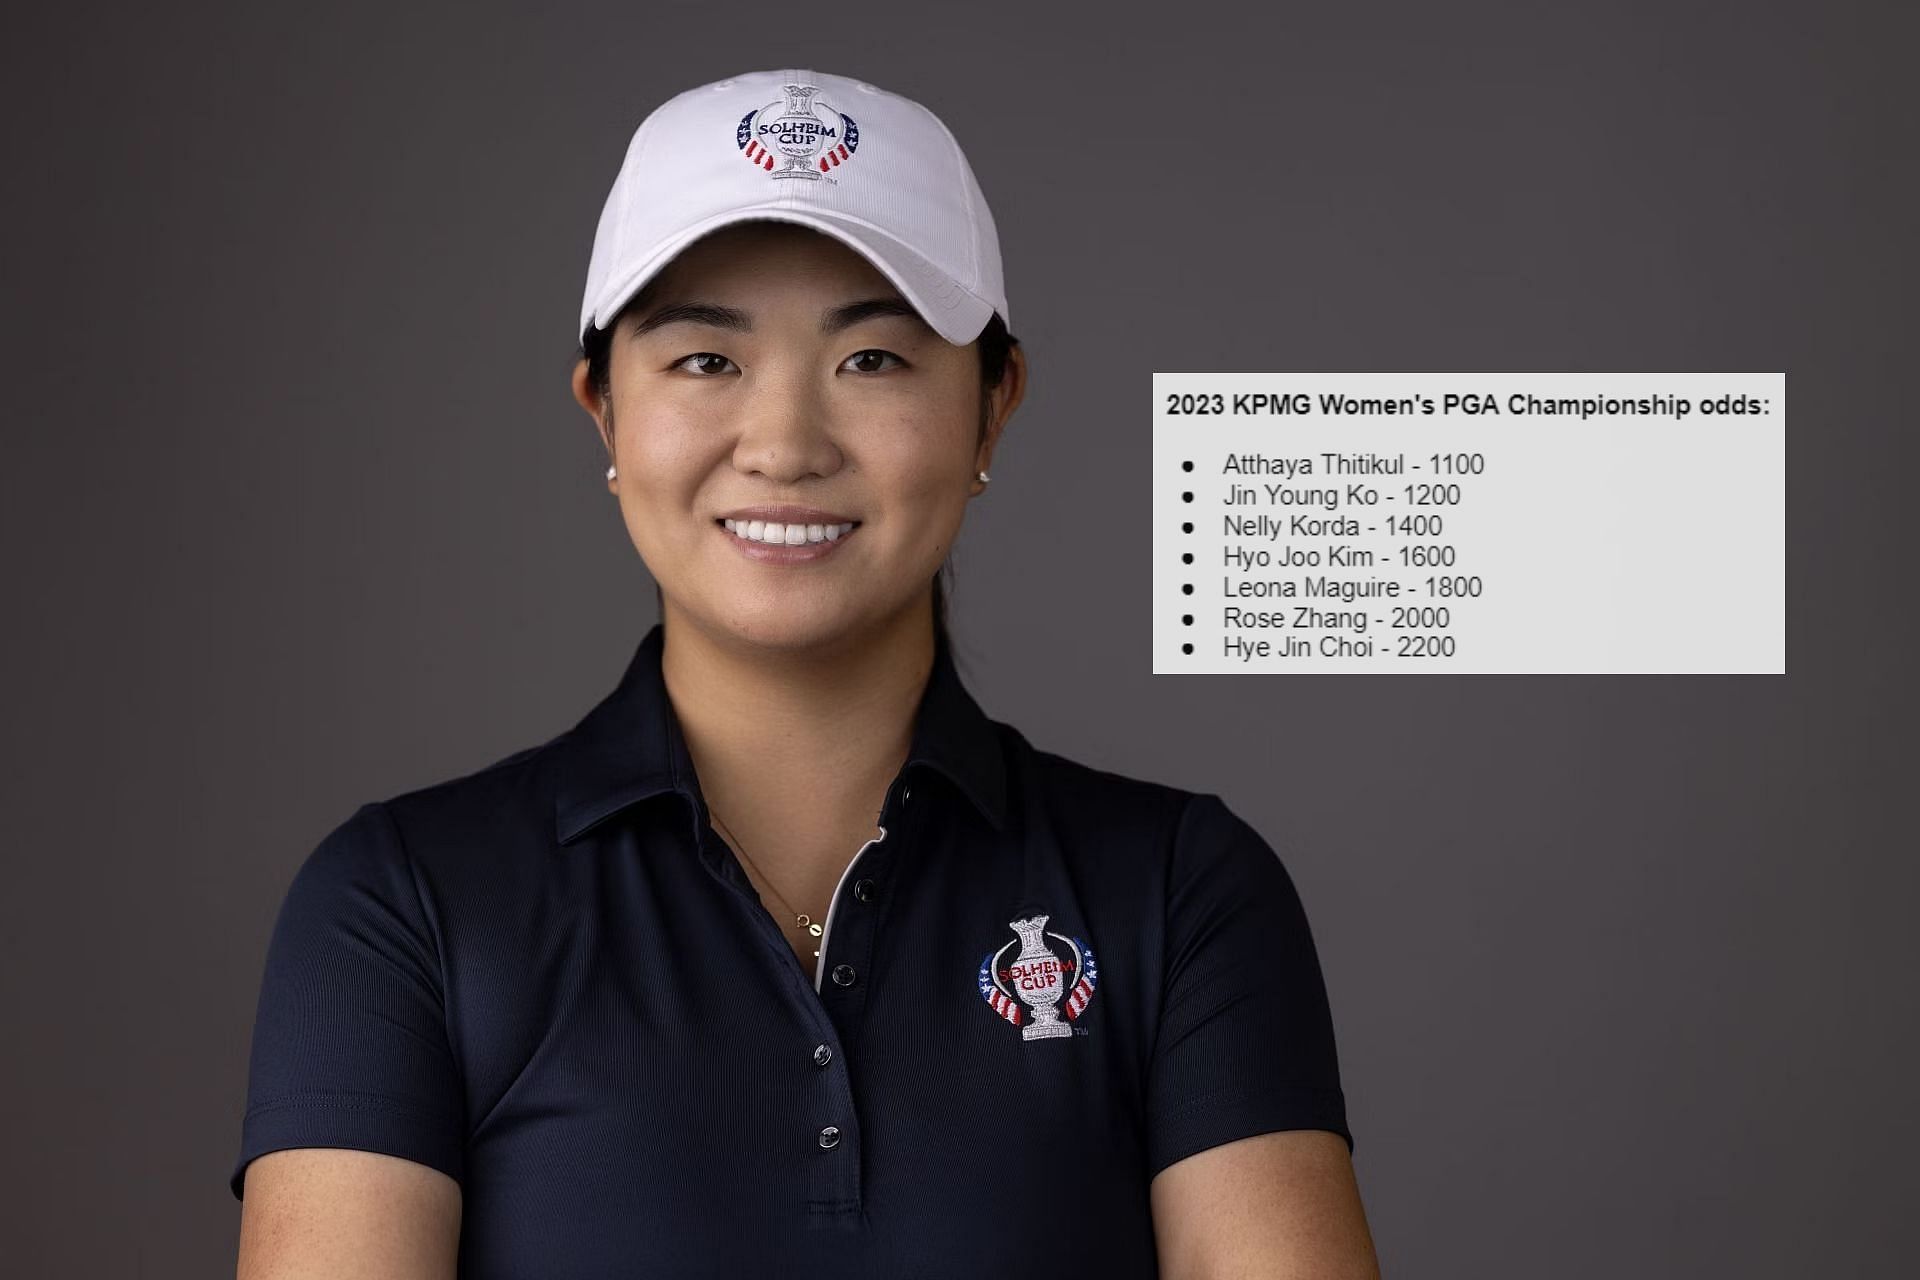 Can 20-year-old Rose Zhang win the KPMG Women’s PGA Championship 2023 ...